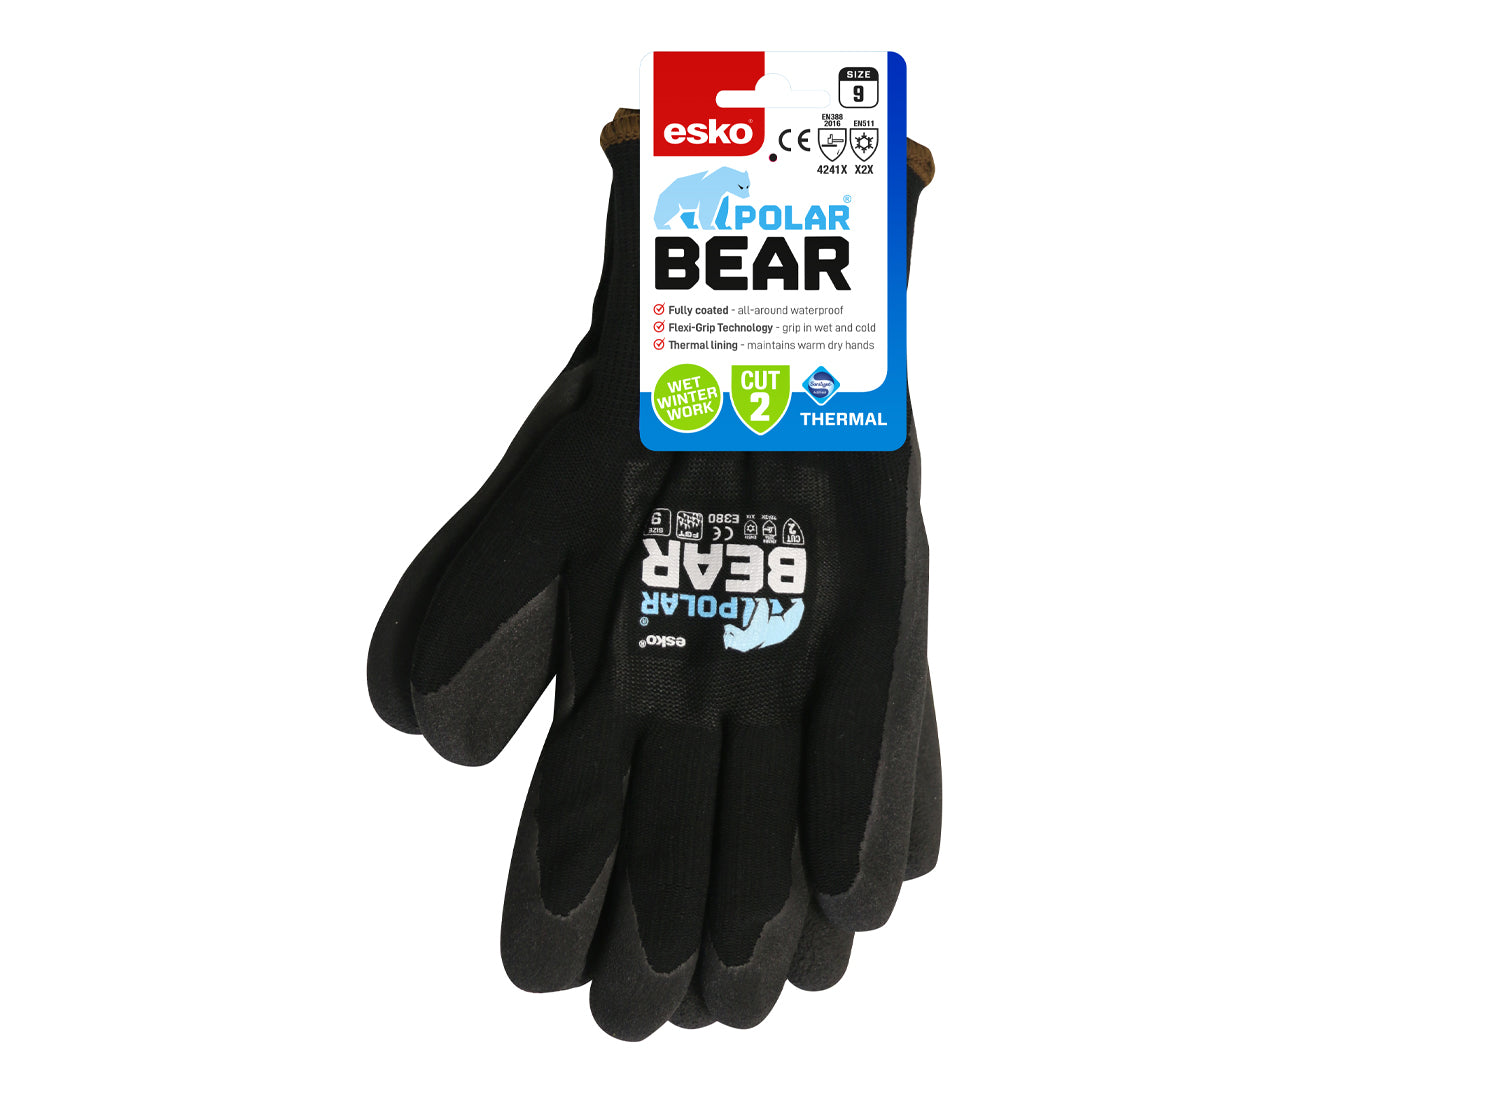 Esko Polar Bear Thermal Glove - Size 10 (XL) Header Carded